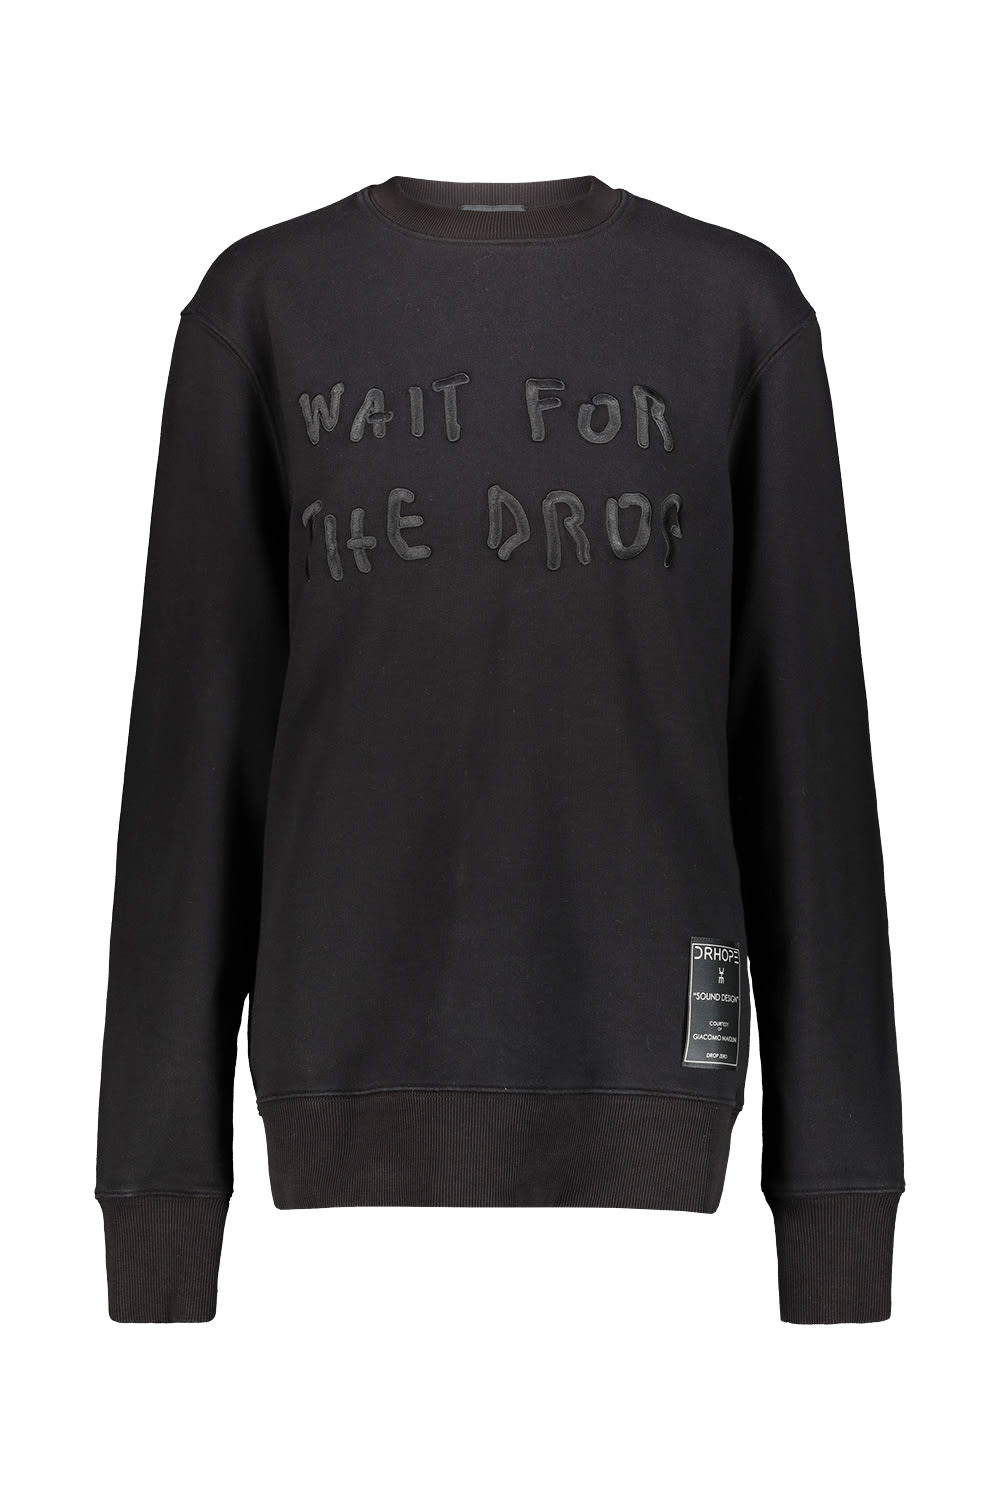 Drhope Black Crewneck Sweatshirt